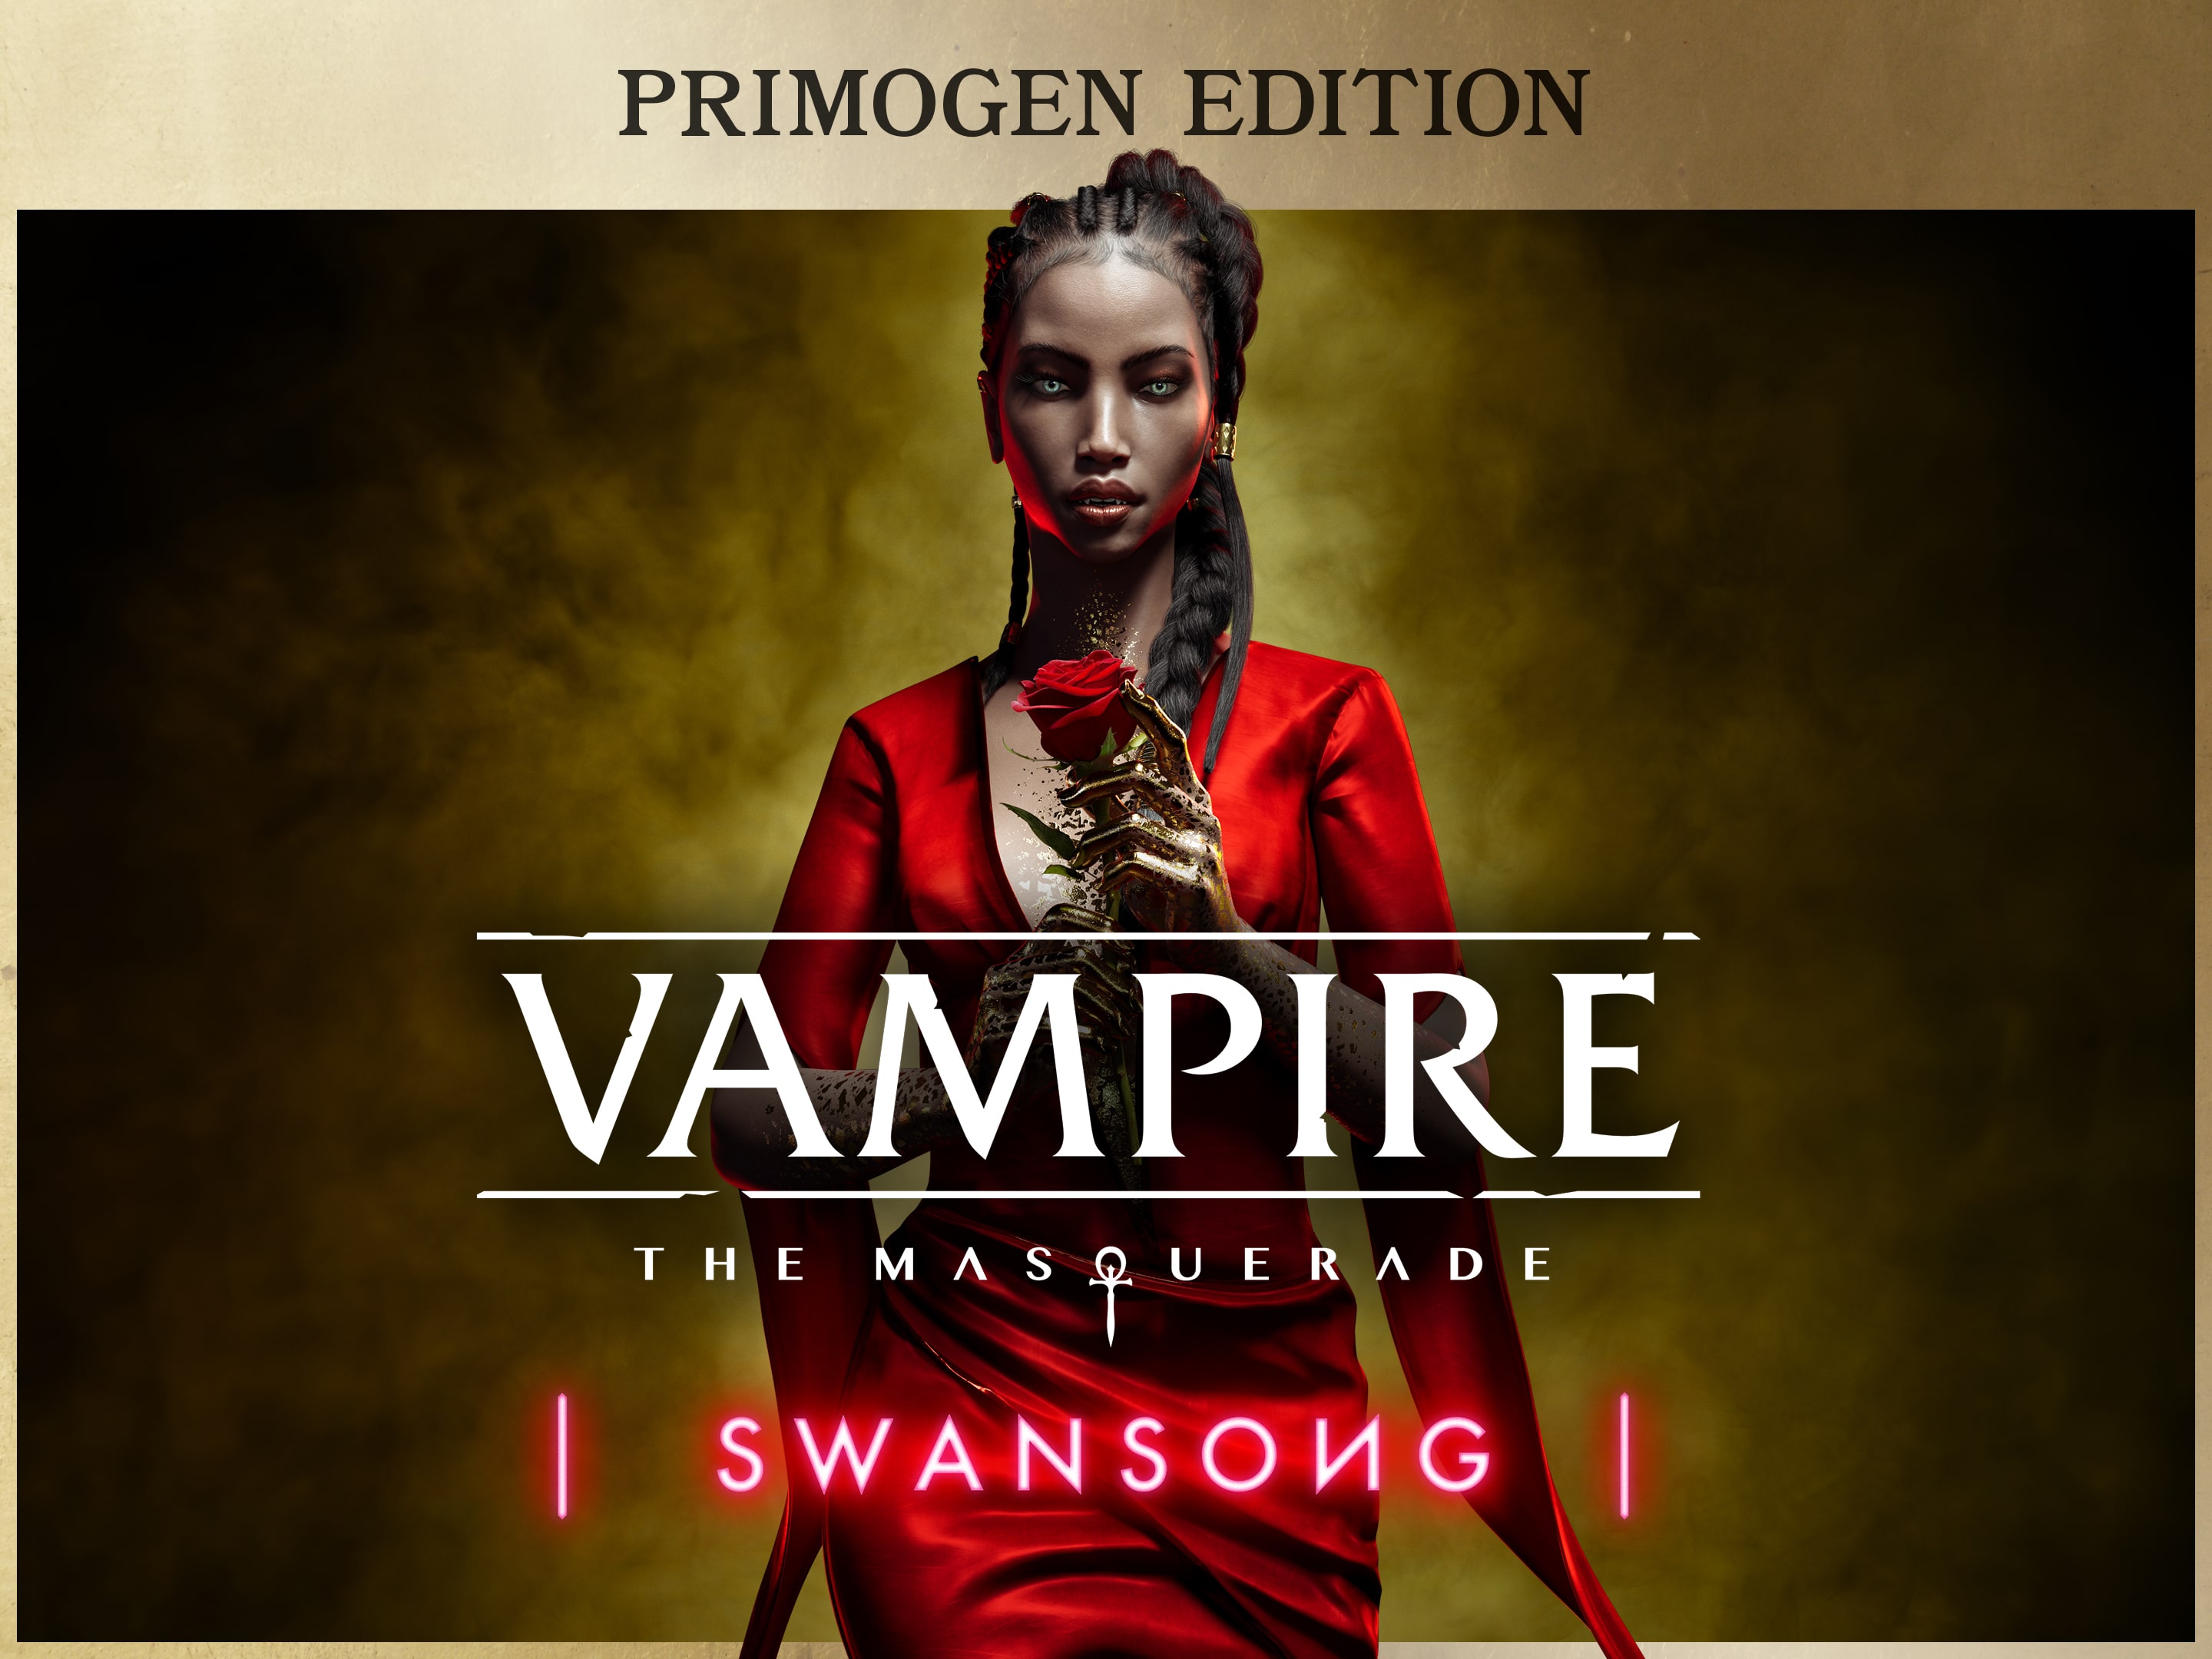 Trade In Vampire: The Masquerade Swansong - PlayStation 5